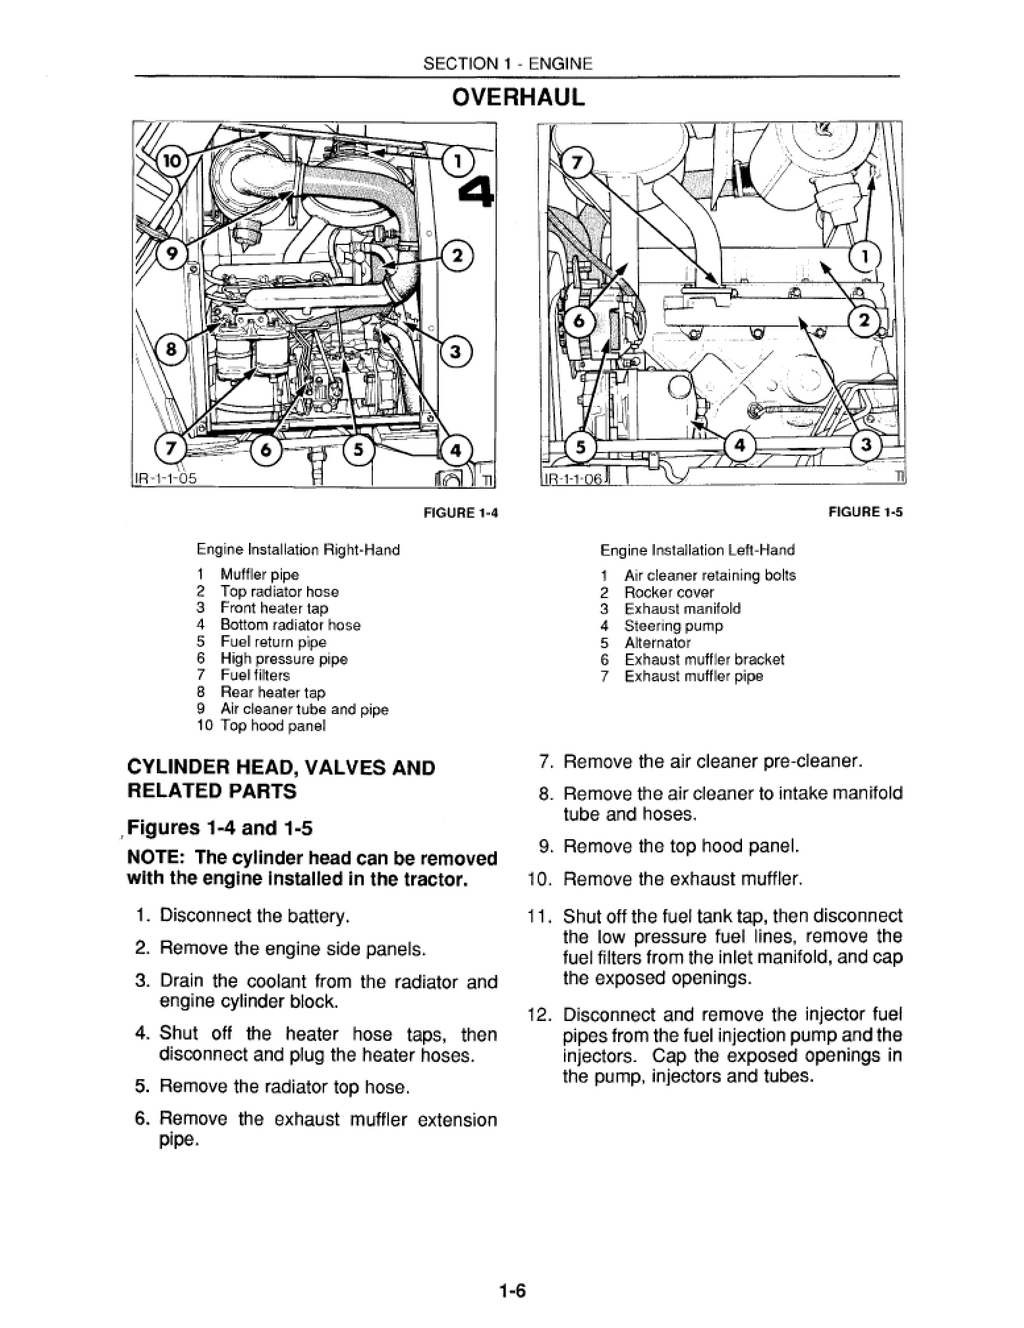 Picture of: Ford D, D, D, D, D Tractor-Loader-Backhoe – Service Manual